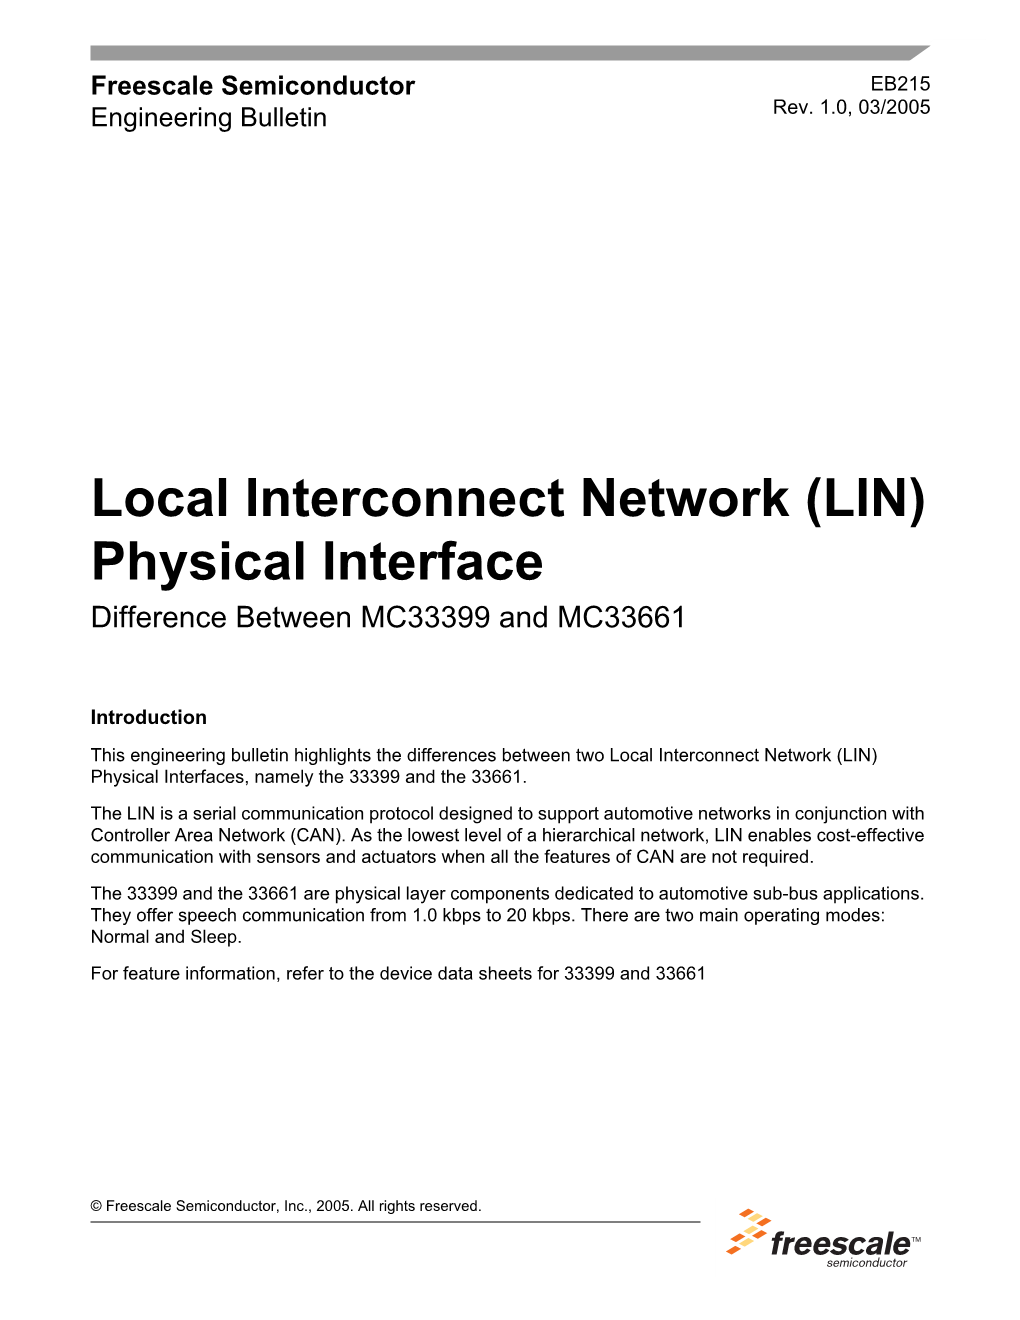 EB215 Local Interconnect Network (LIN)